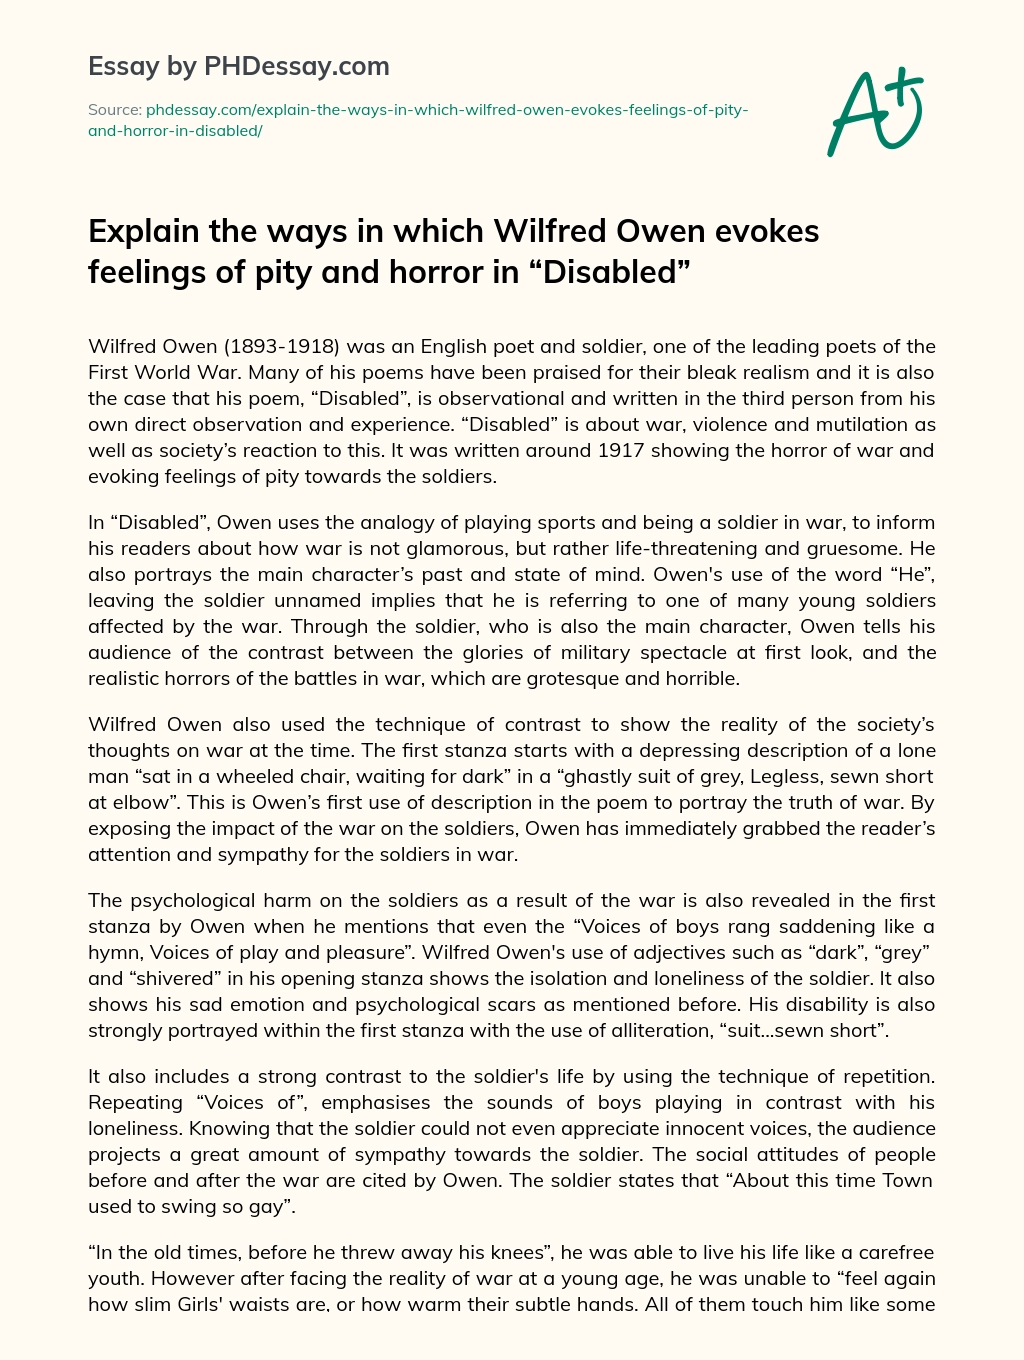 wilfred owen disabled poem analysis